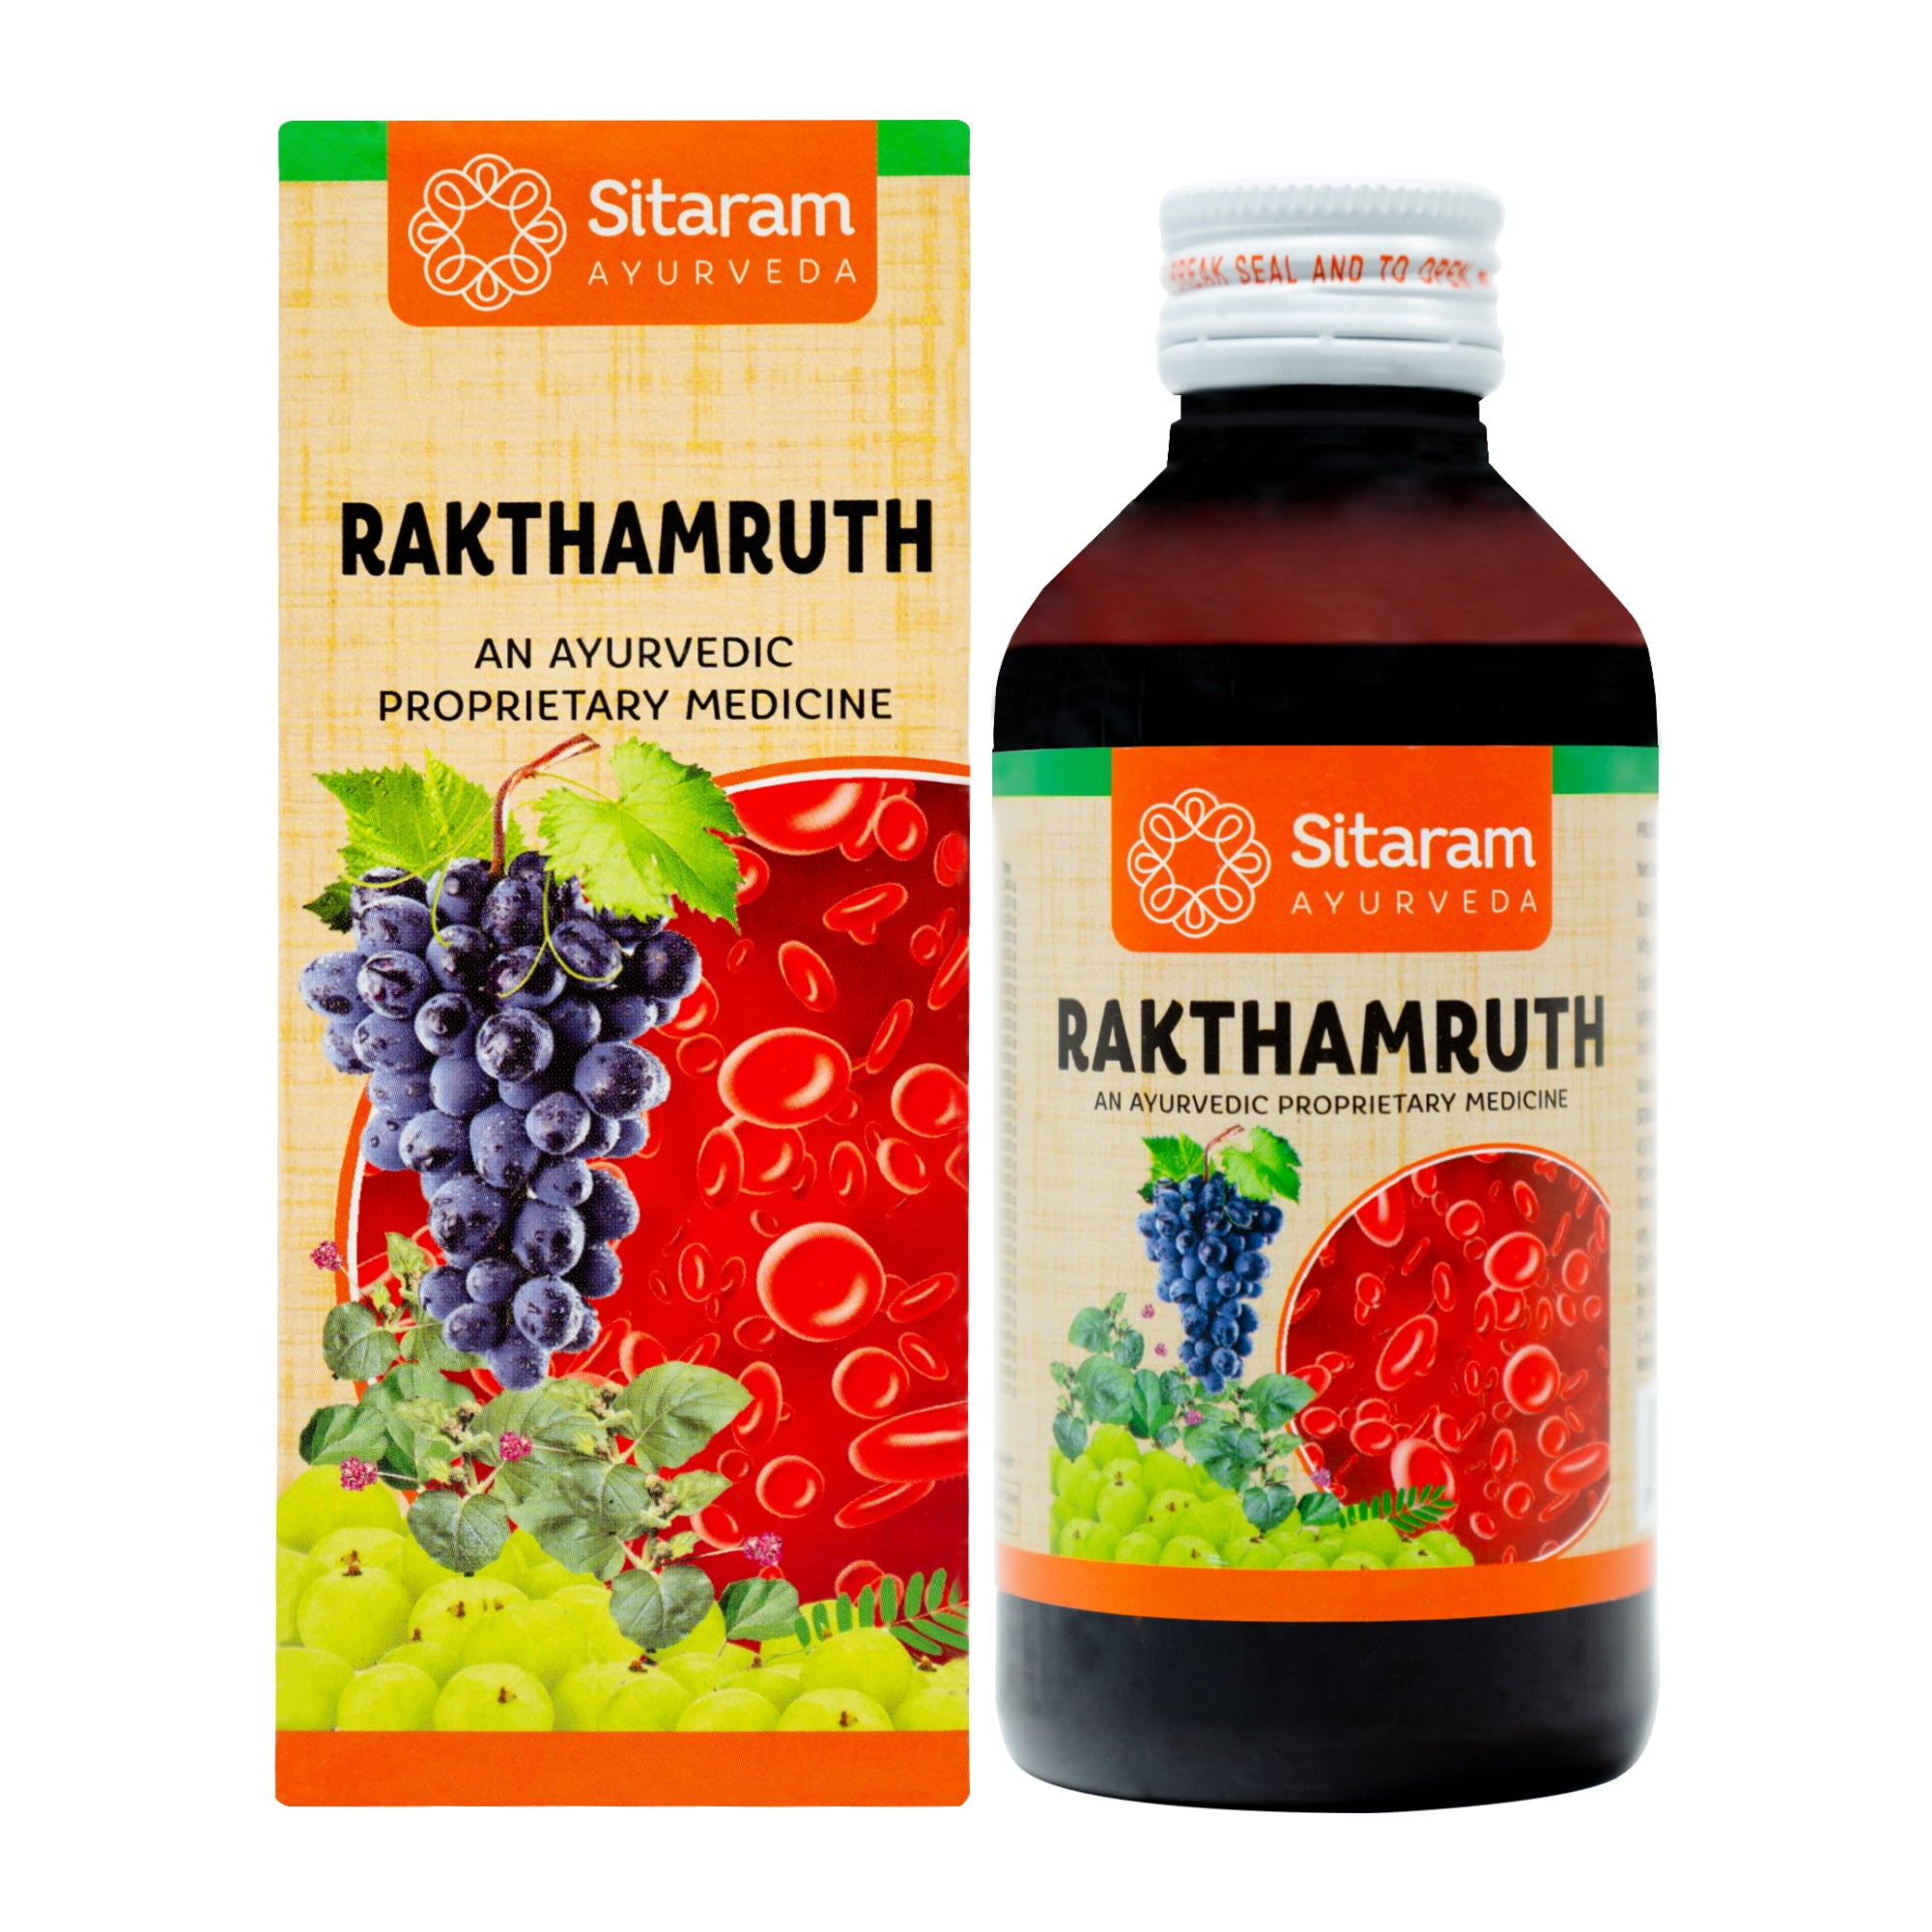 Sitaram Ayurveda Rakthamruth 200Ml -  Pack of 2  (Prescription Medication)